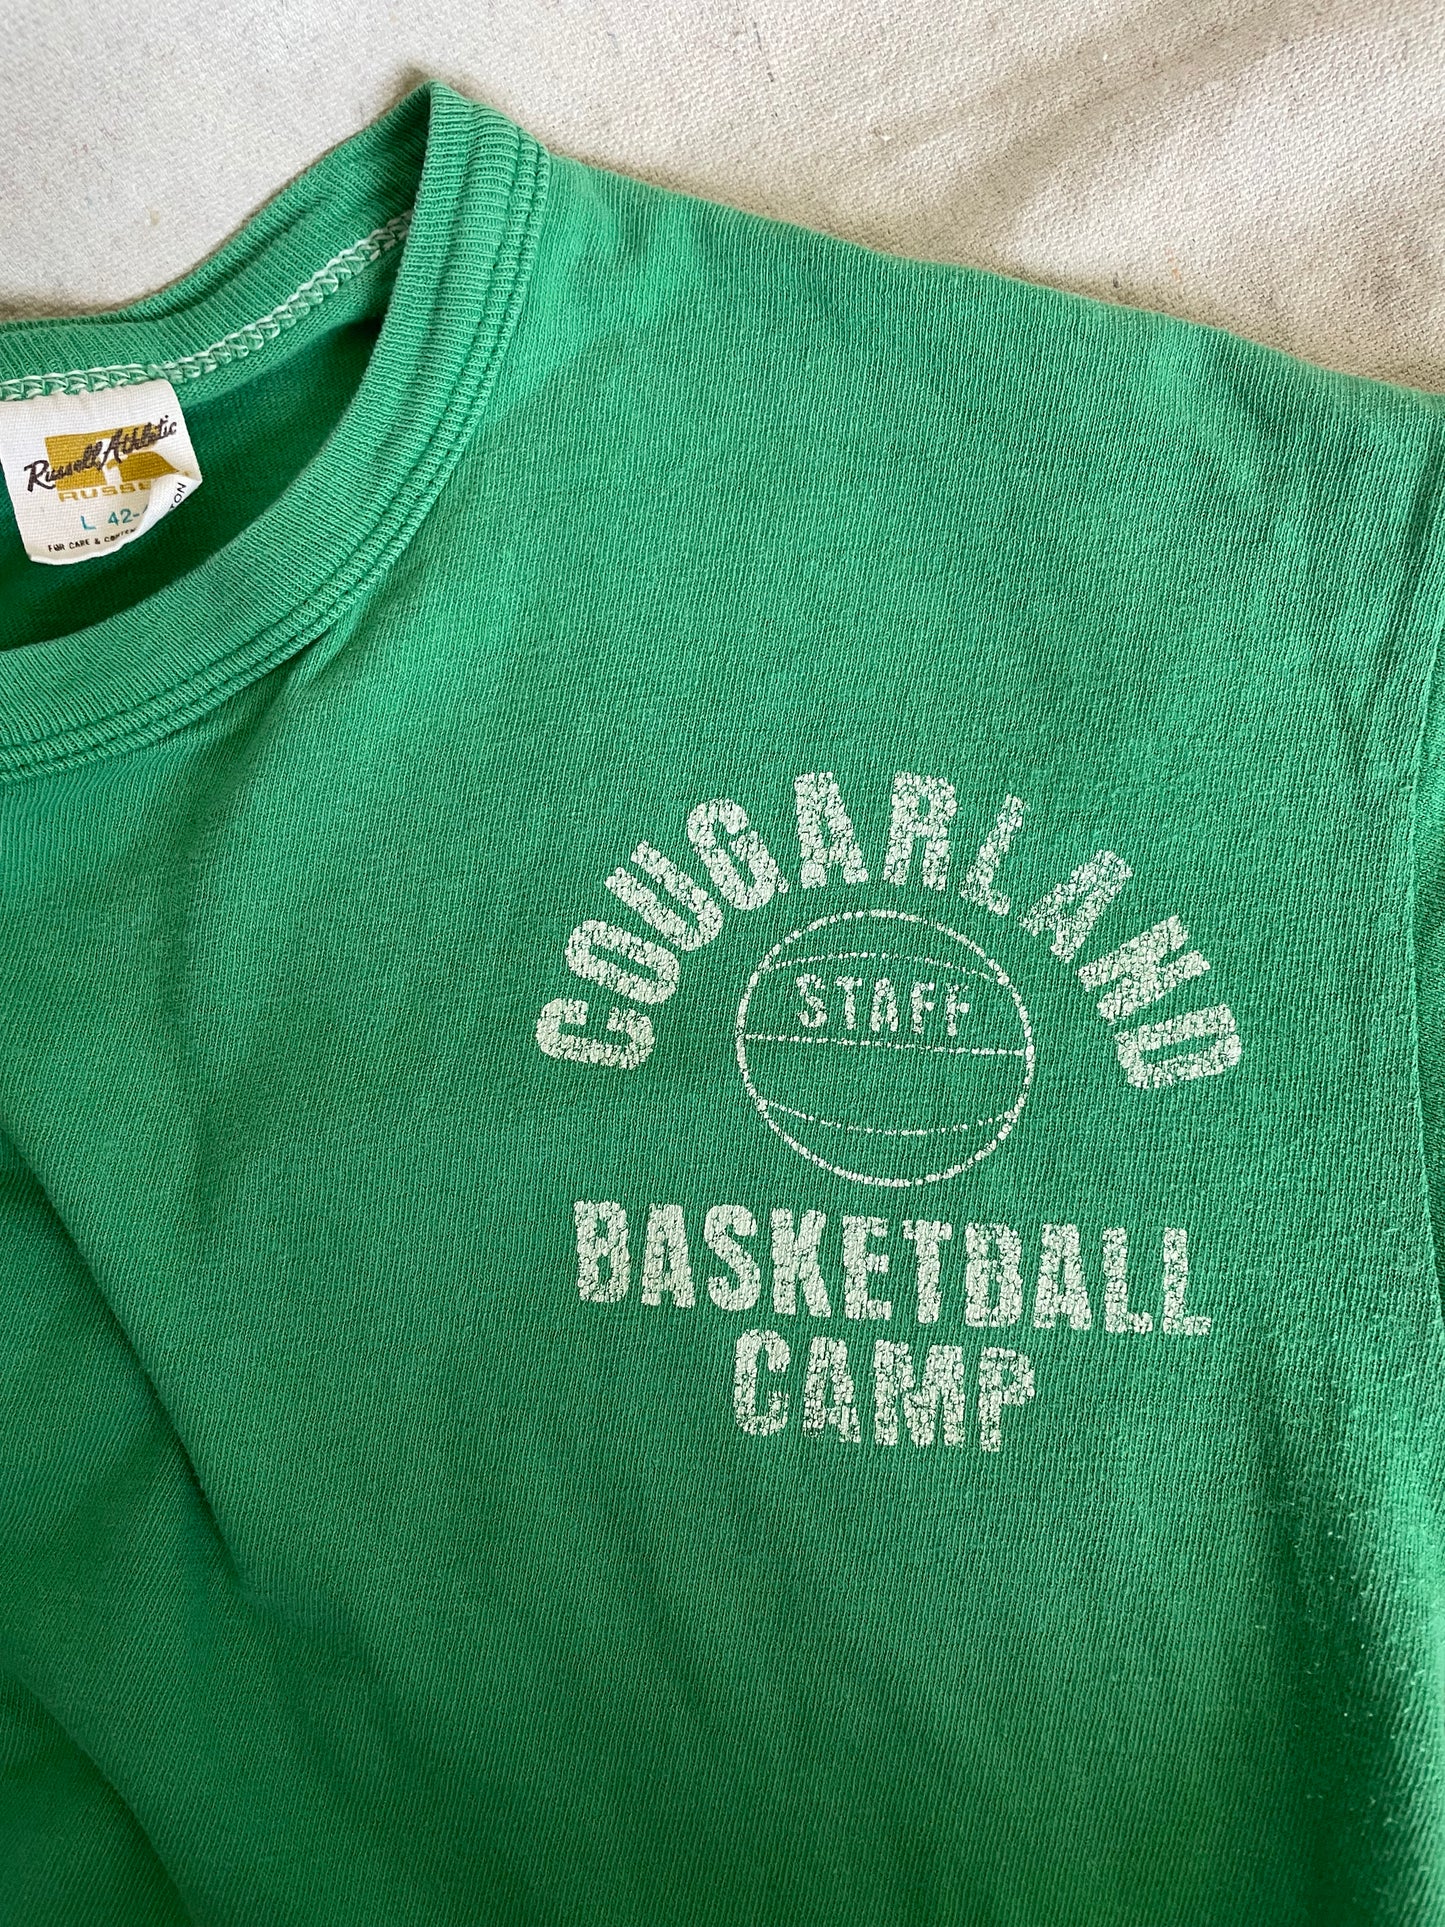 70s Cougarland Basketball Camp Tee